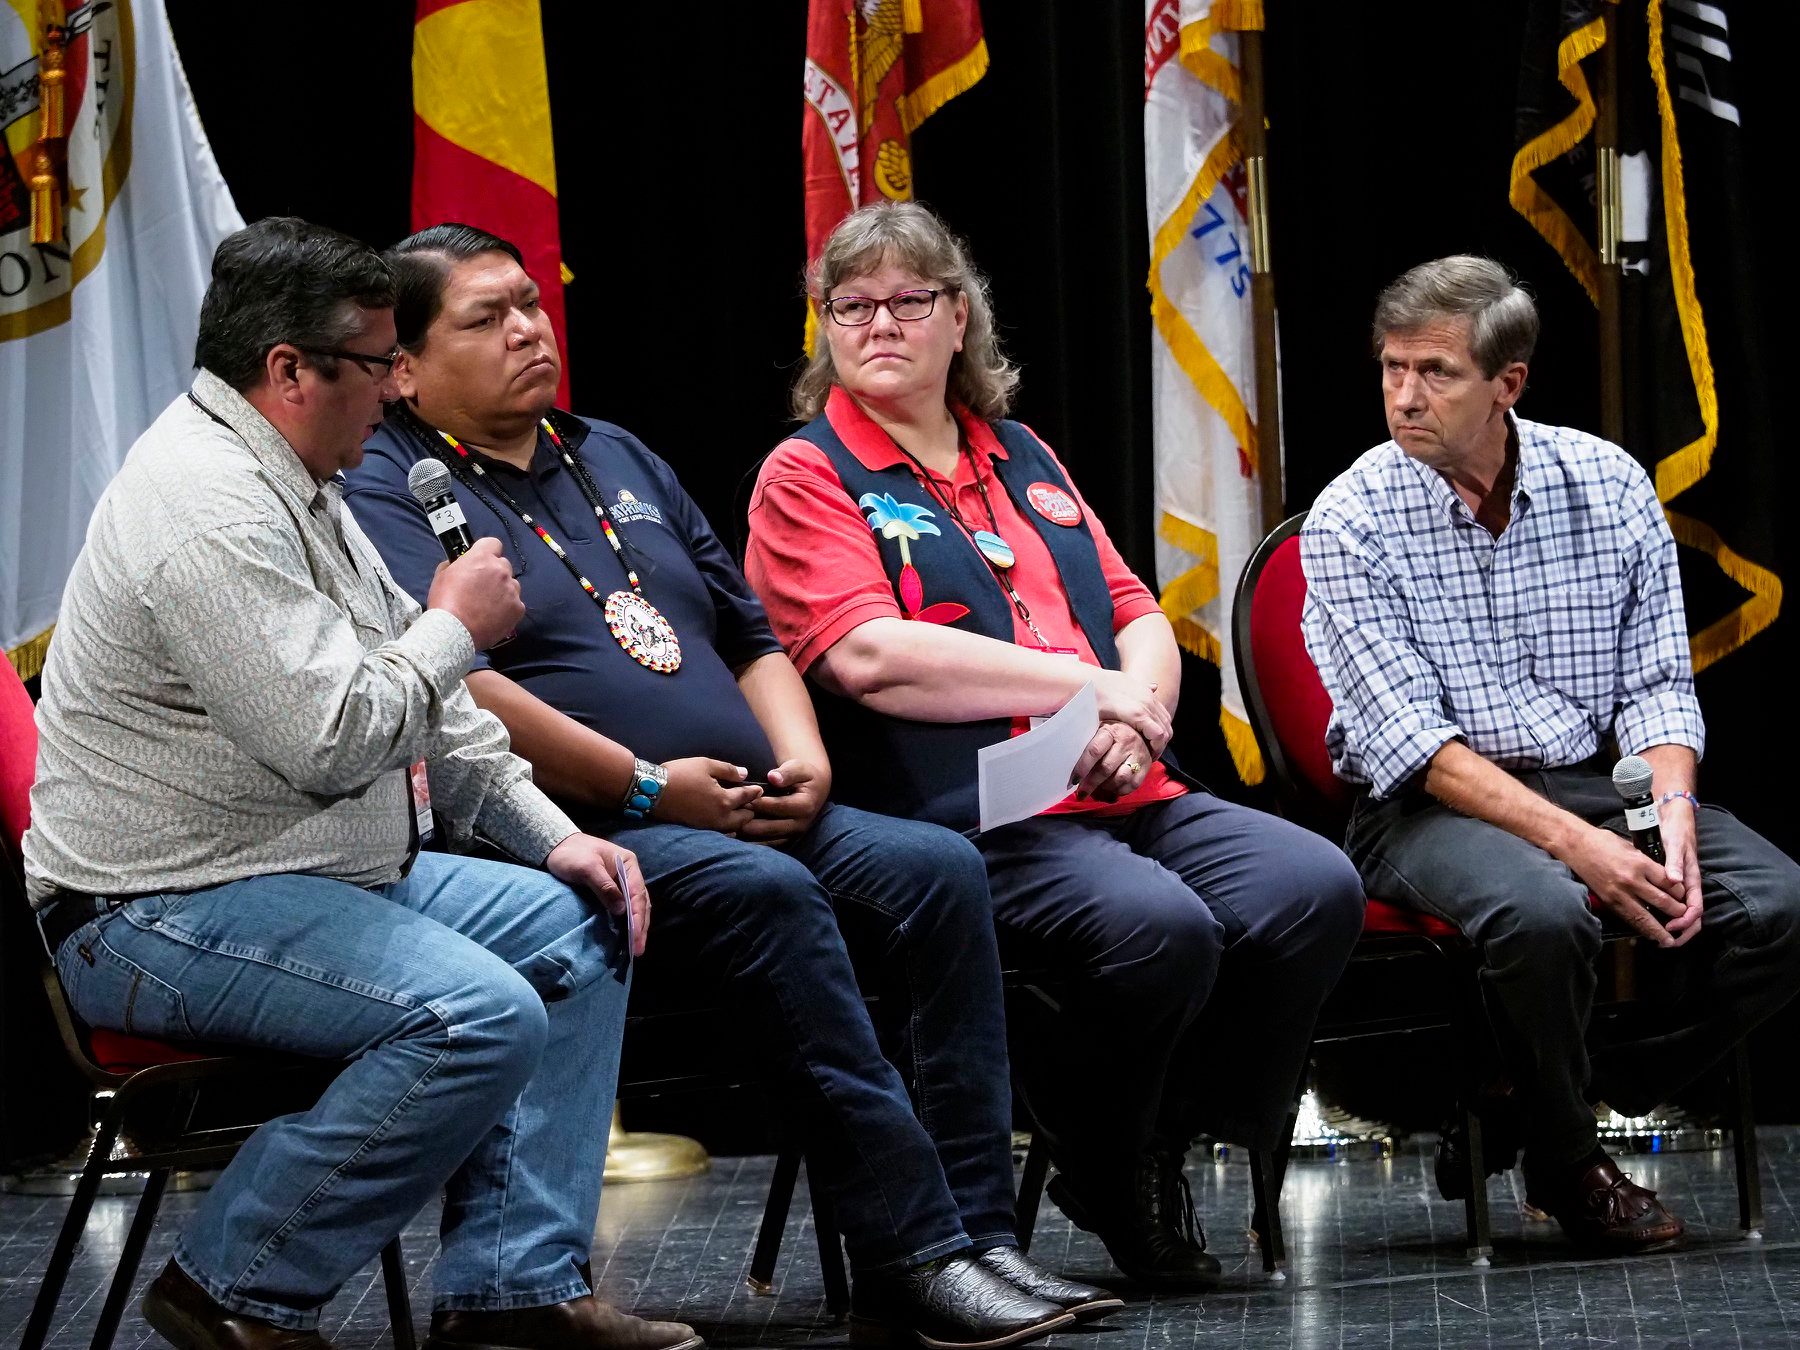 AUDIO/VIDEO: Joe Sestak at Frank LaMere Native American Presidential Forum